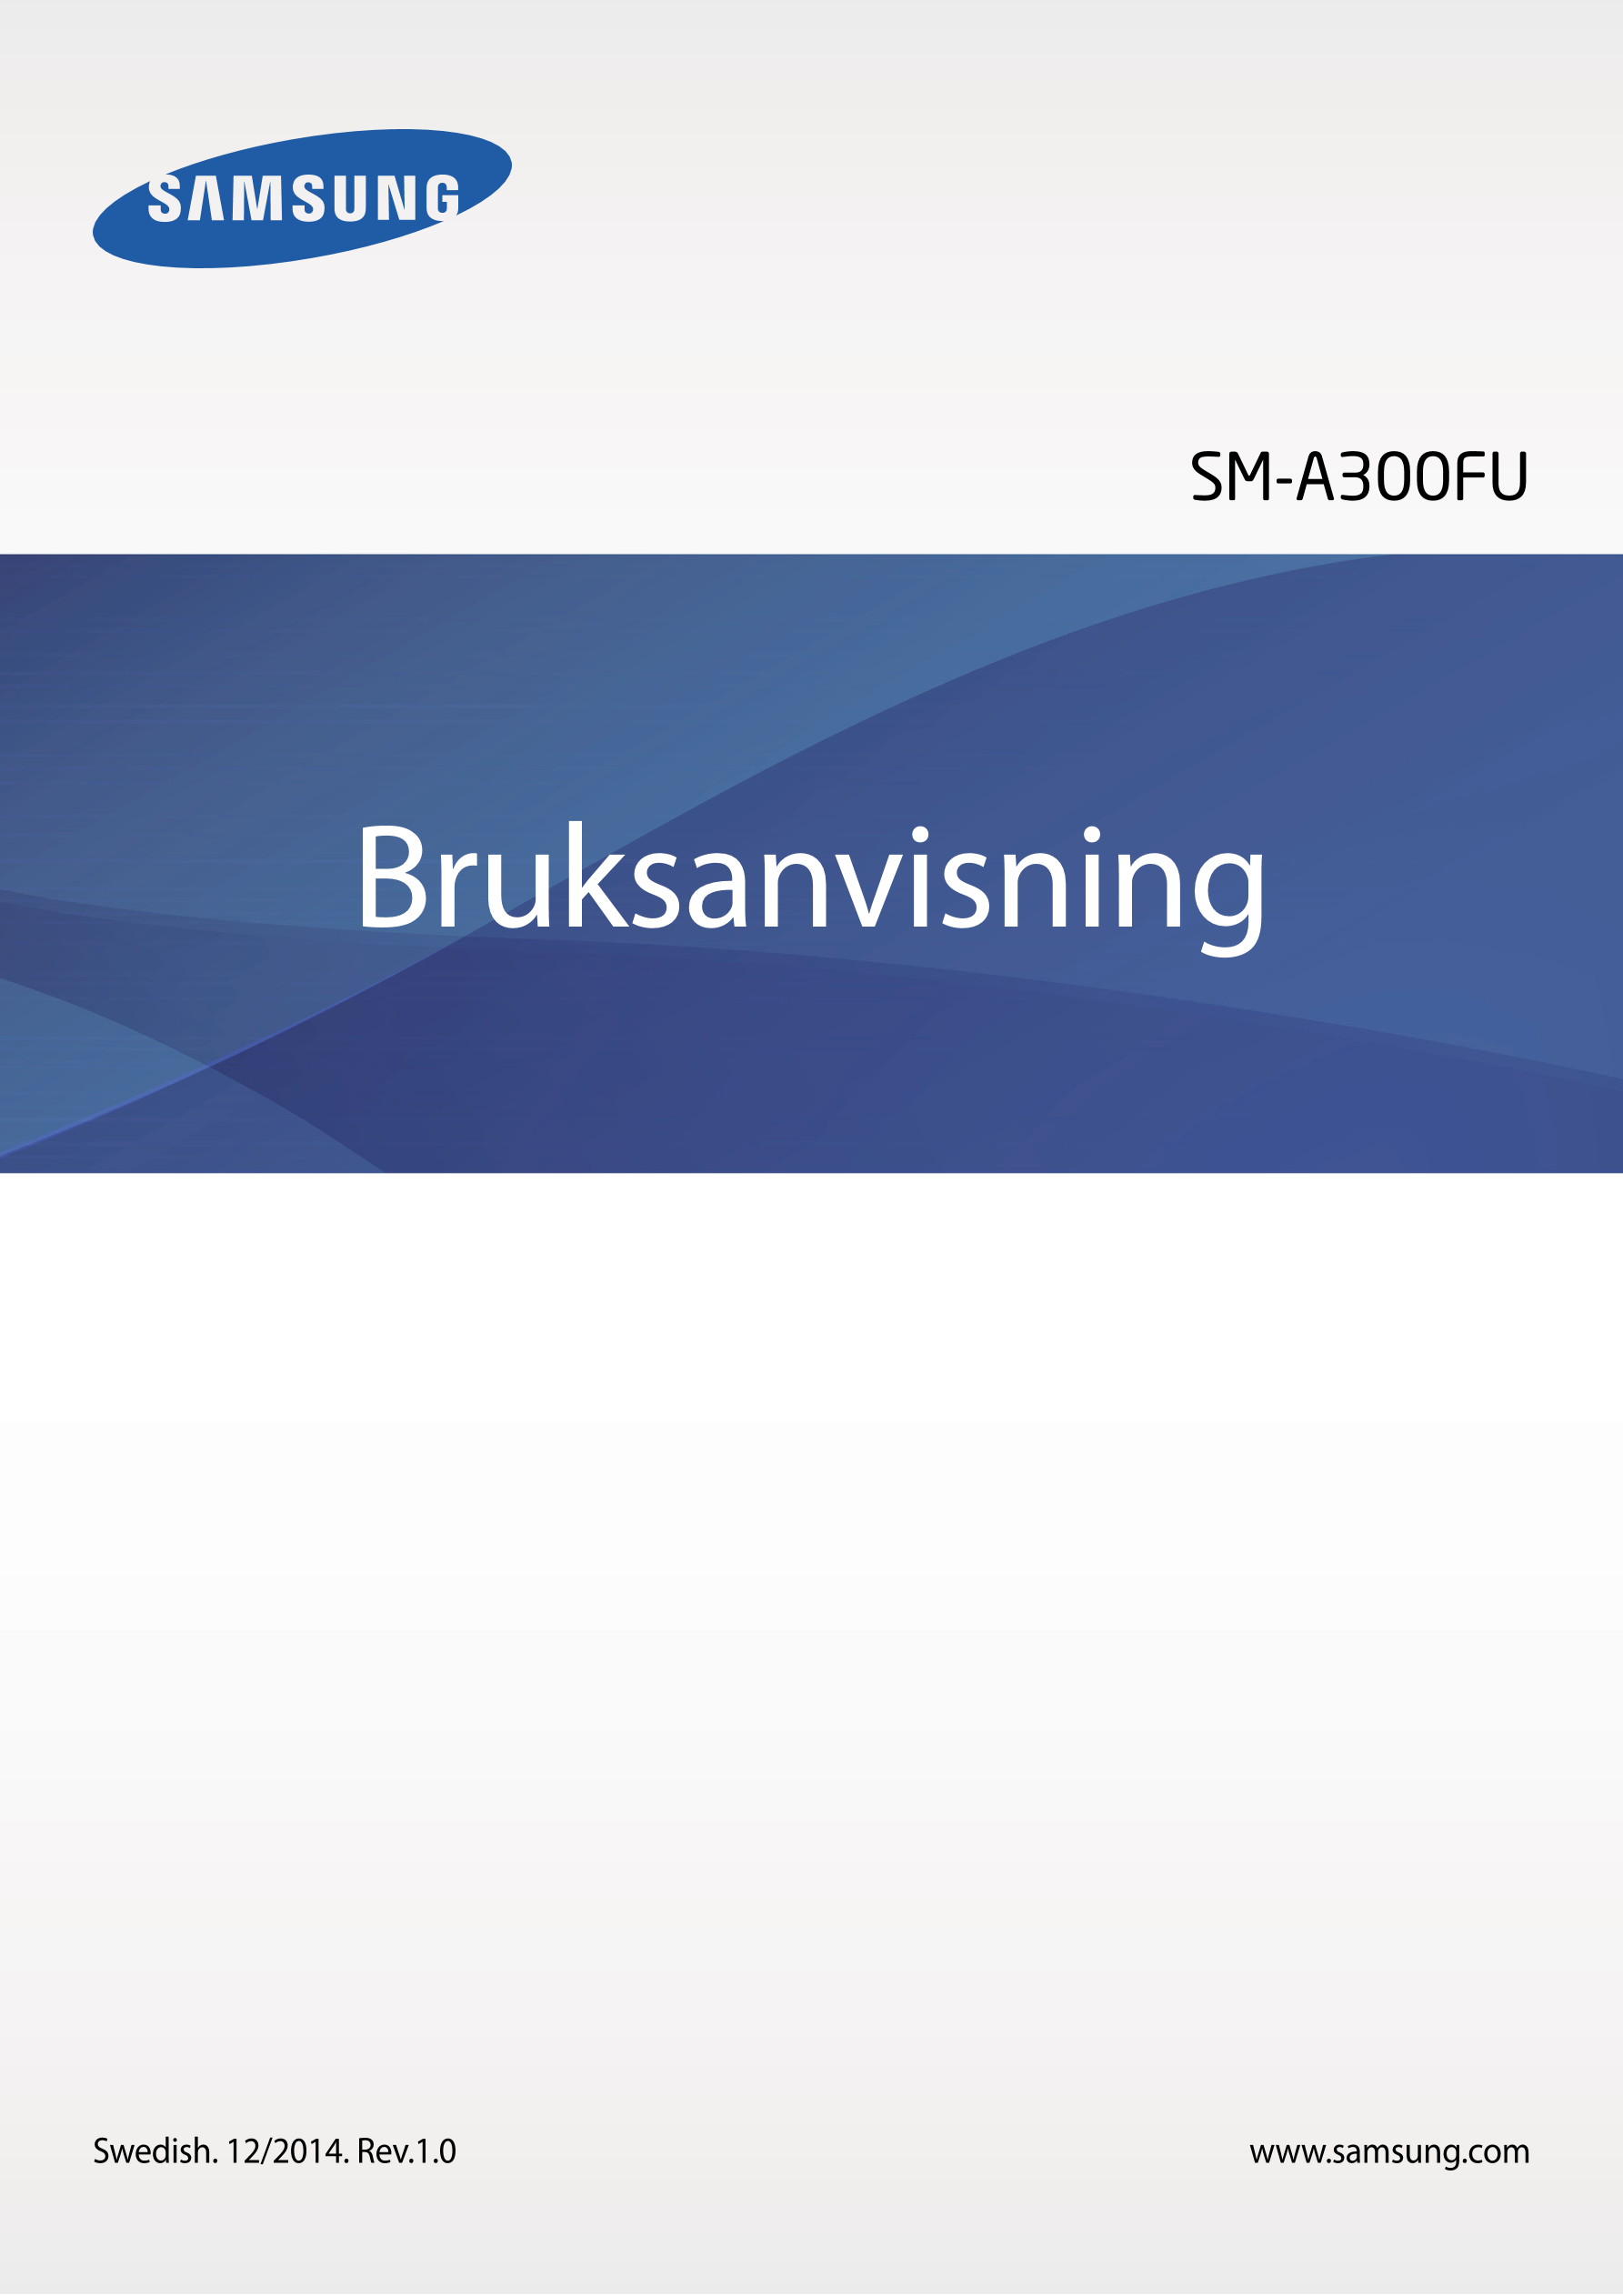 SM-A300FU
Bruksanvisning
Swedish. 12/2014. Rev.1.0 www.samsung.com